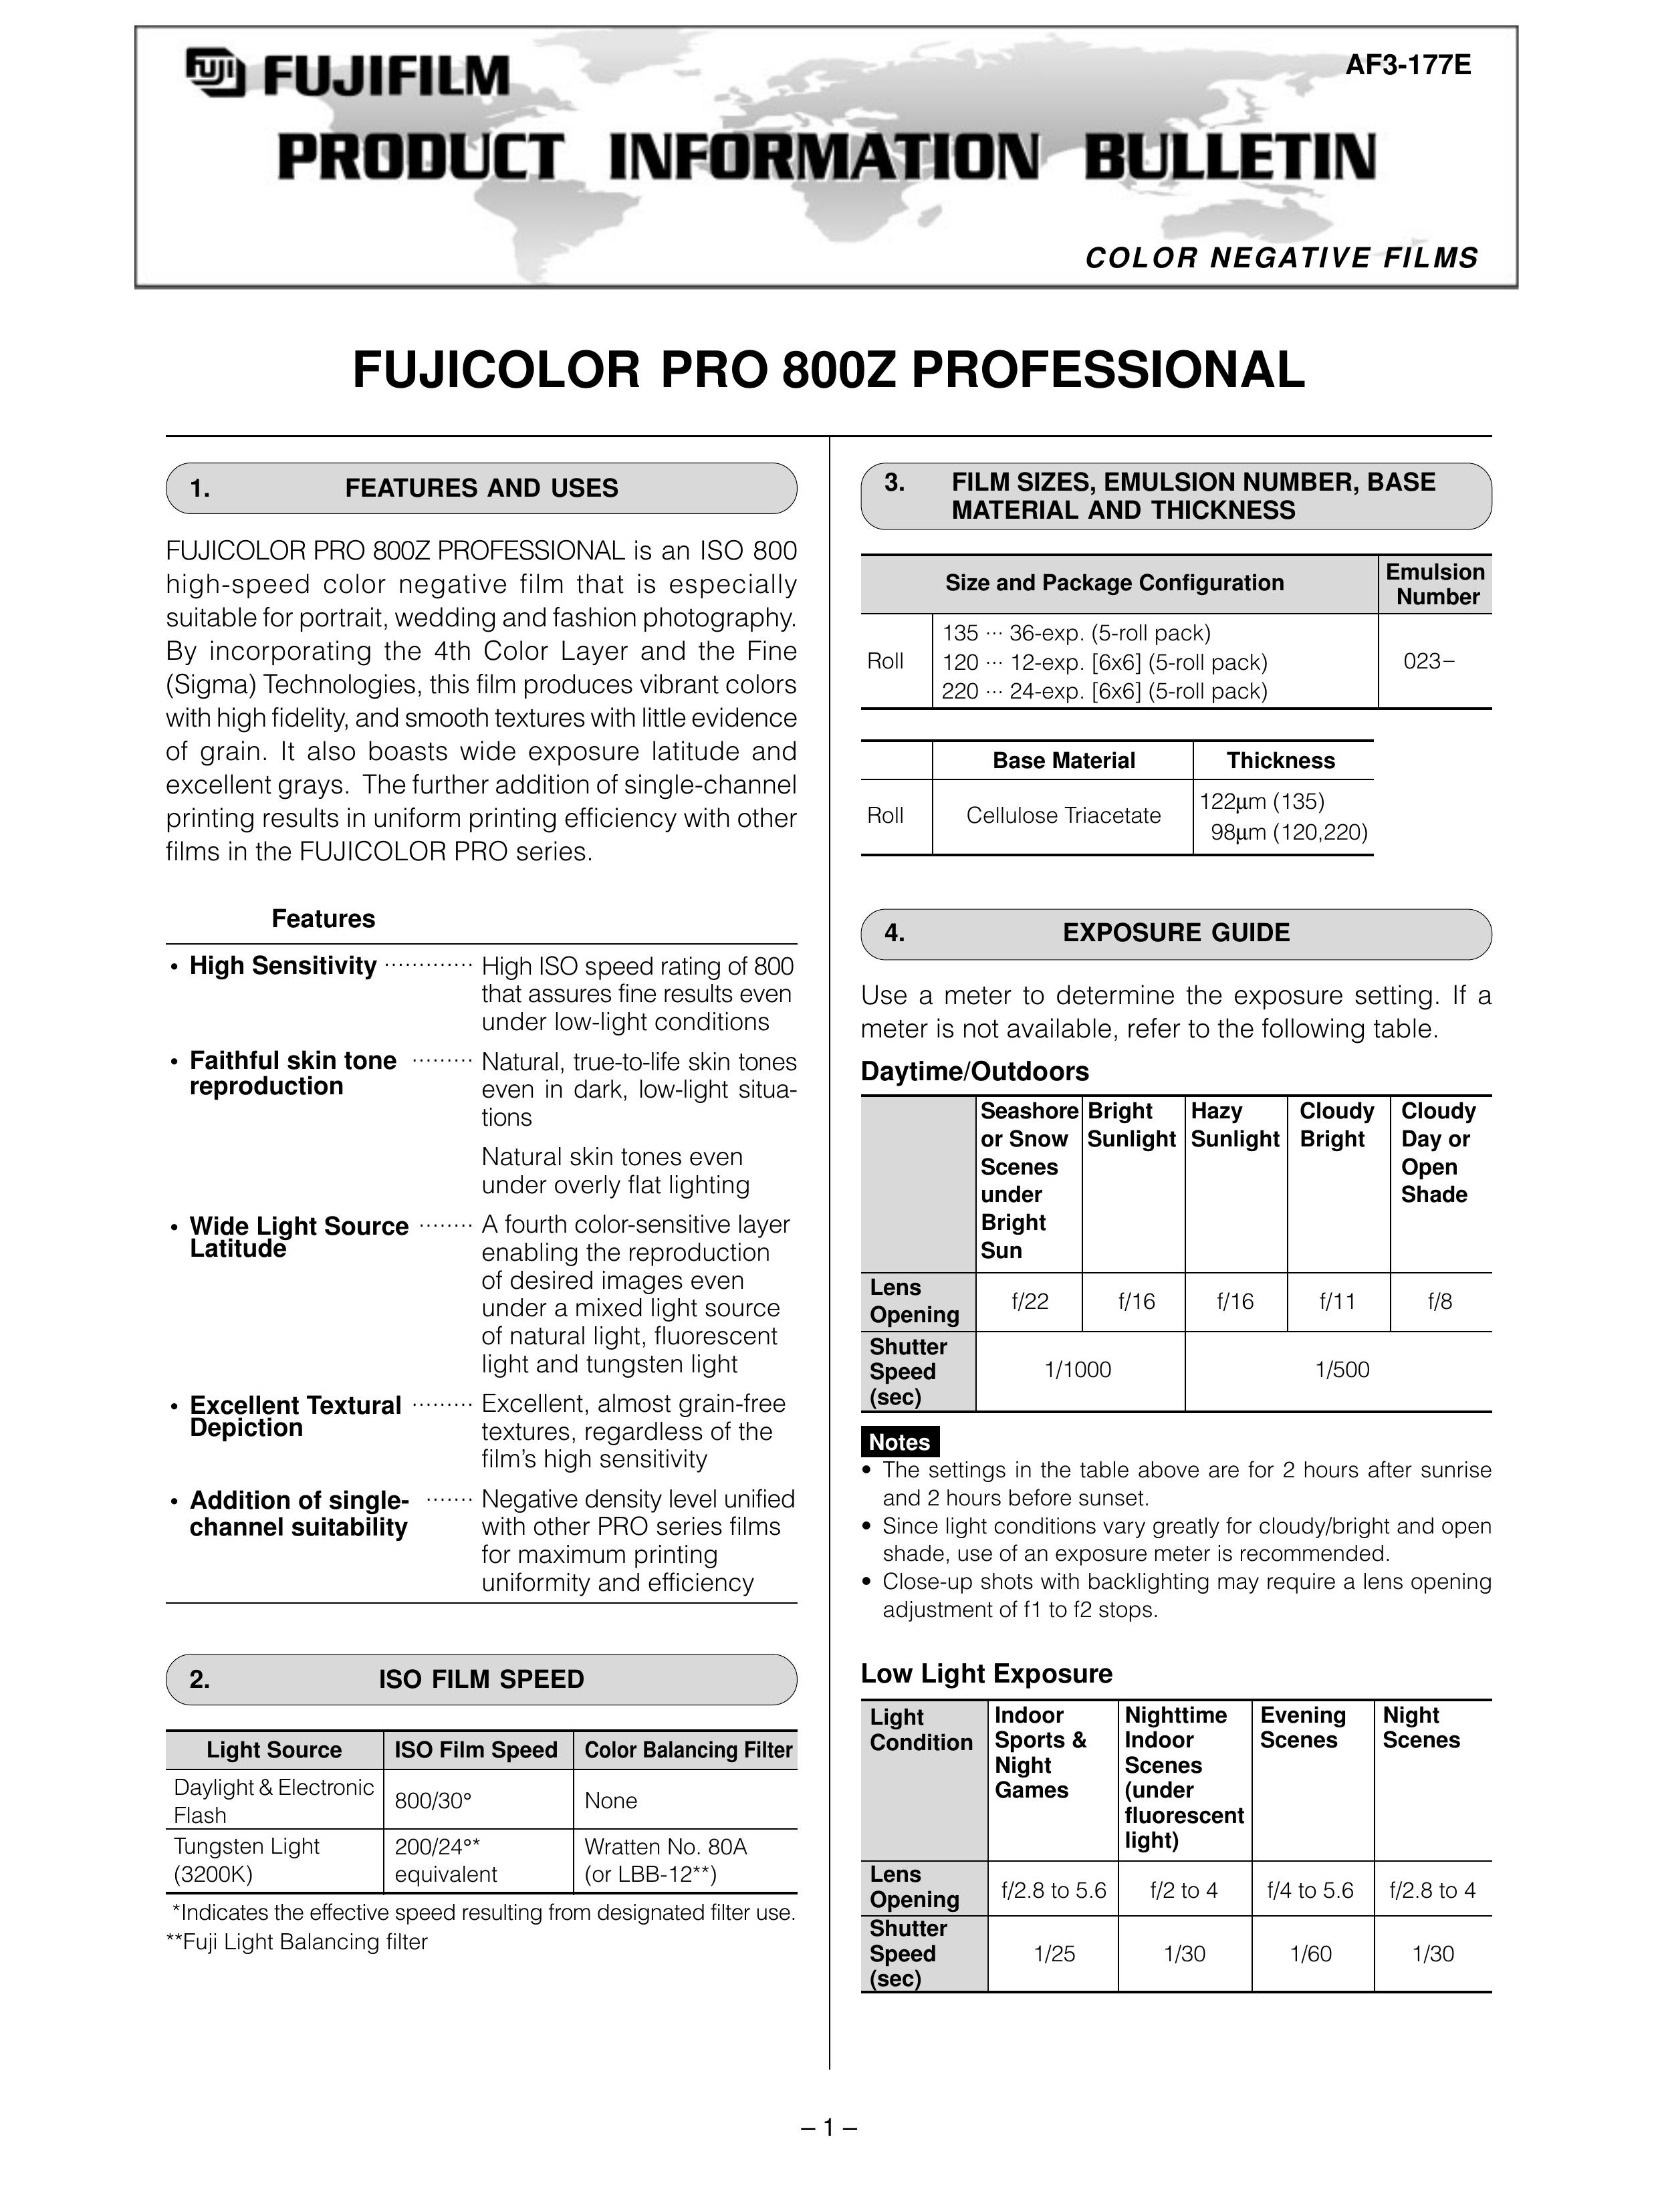 FujiFilm AF3-177E Film Camera User Manual